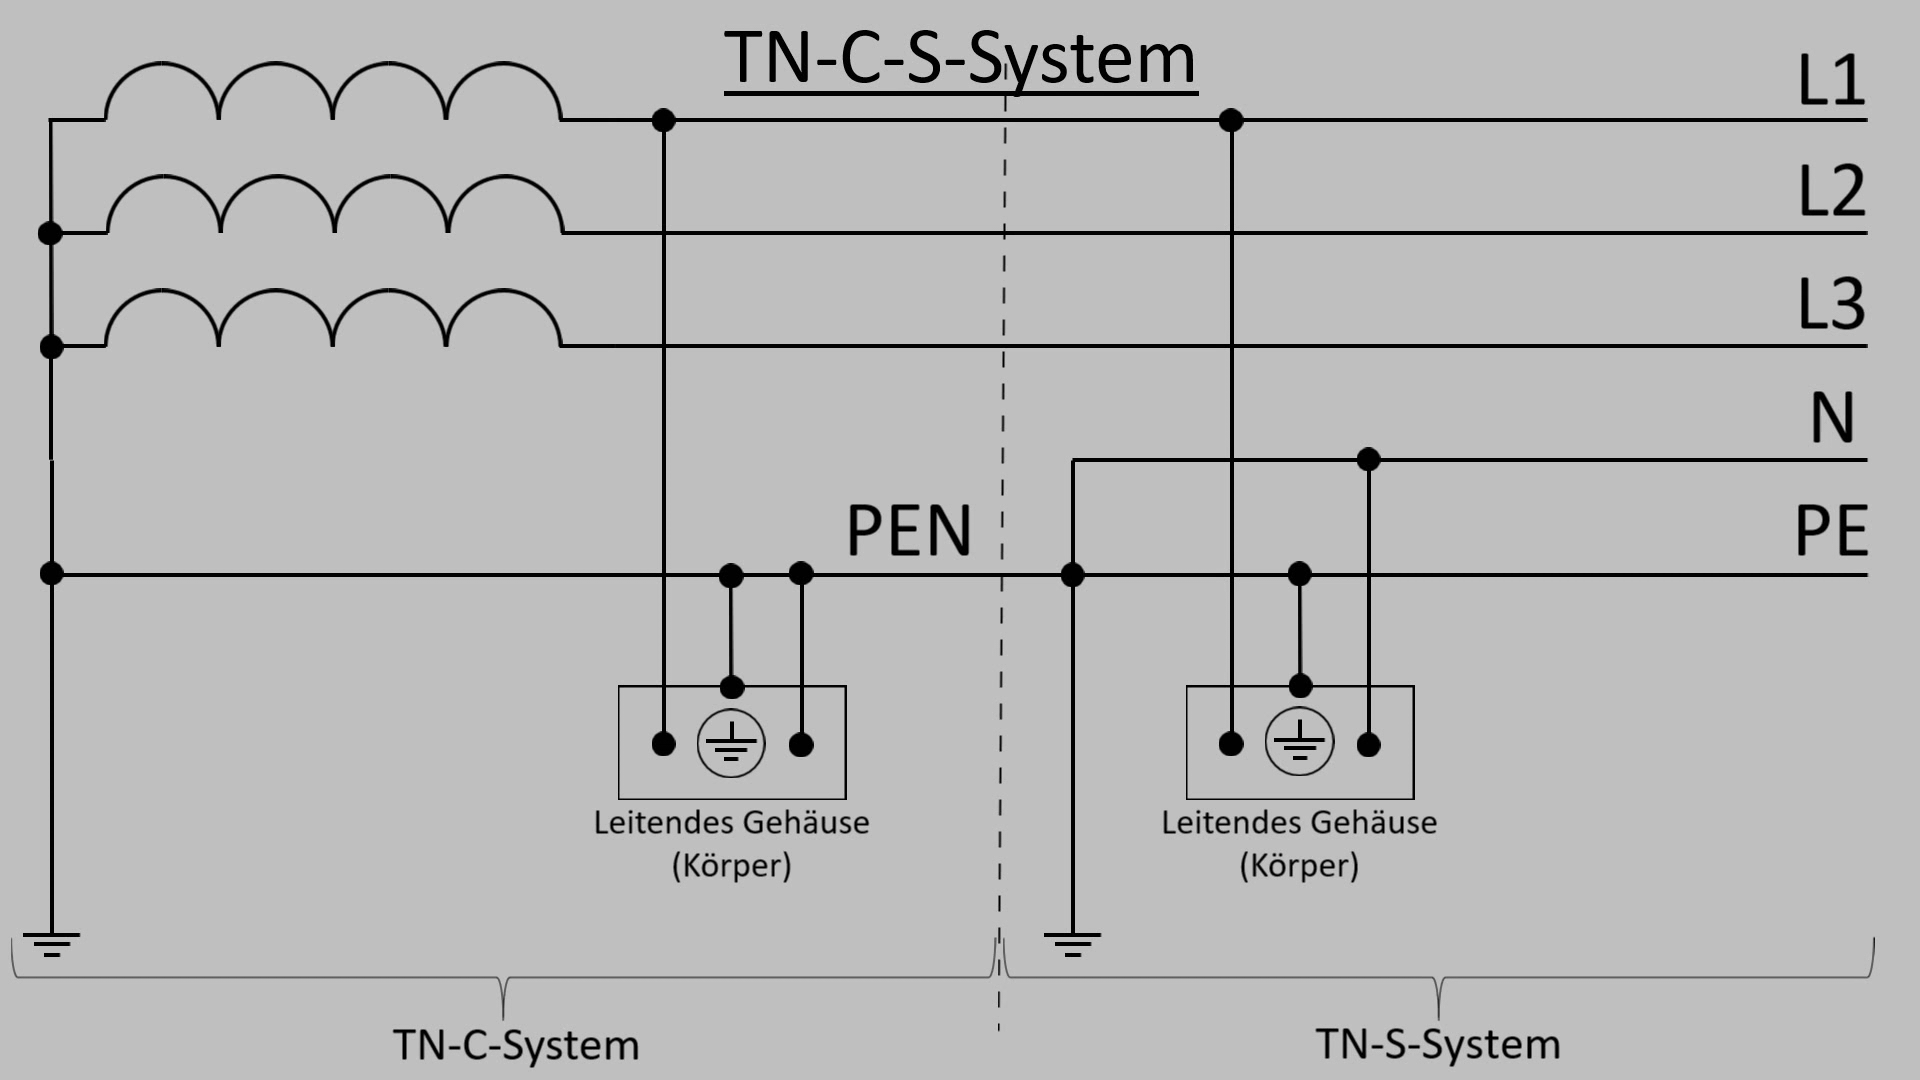 TN-C-S-System